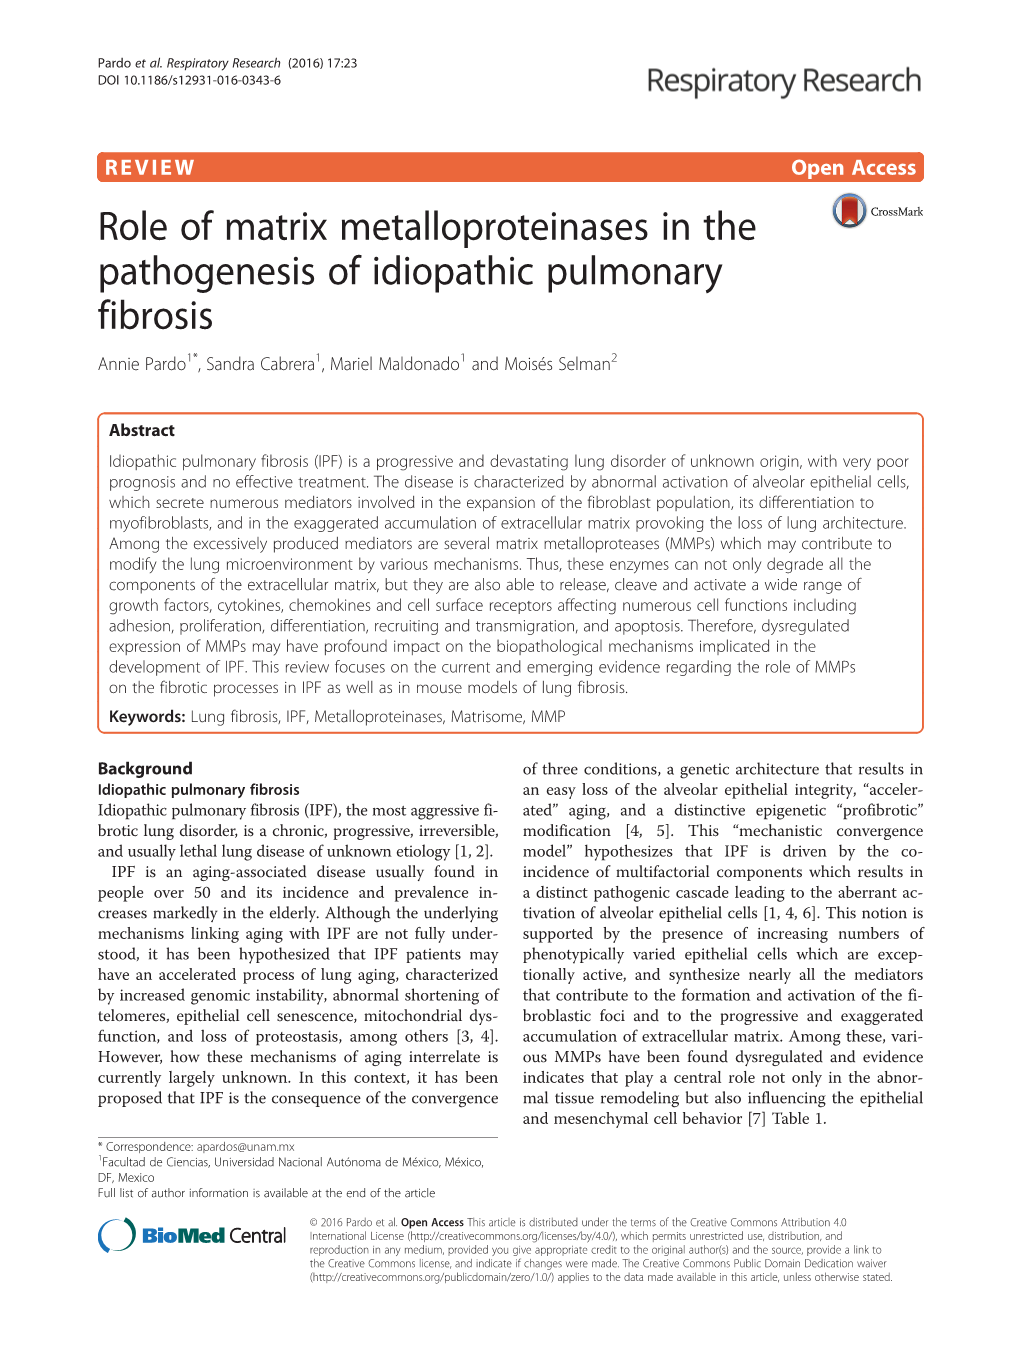 Role of Matrix Metalloproteinases in the Pathogenesis of Idiopathic Pulmonary Fibrosis Annie Pardo1*, Sandra Cabrera1, Mariel Maldonado1 and Moisés Selman2